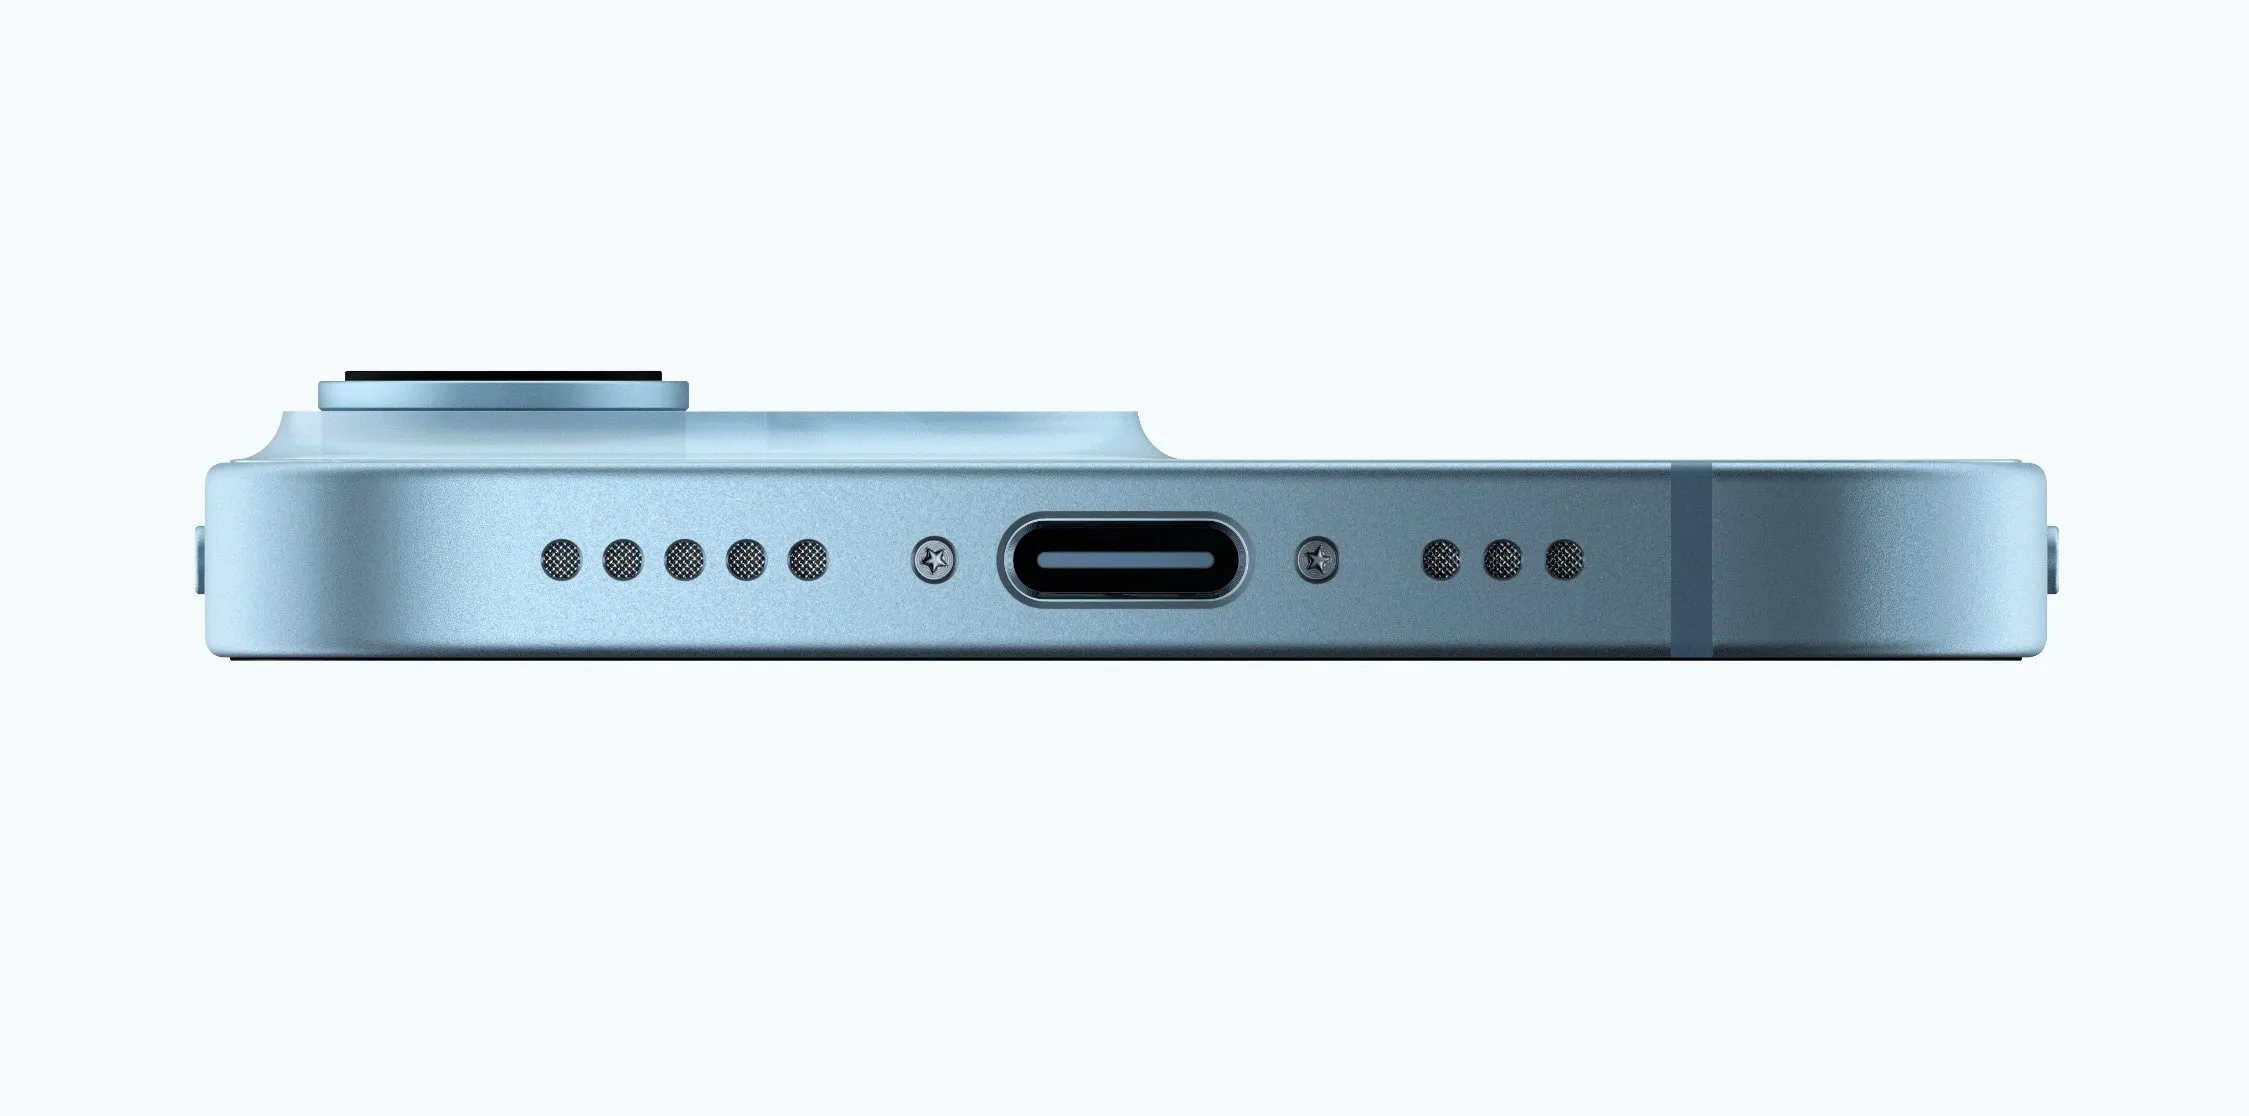 iPhone SE 4 sẽ sử dụng cổng USB Type-C